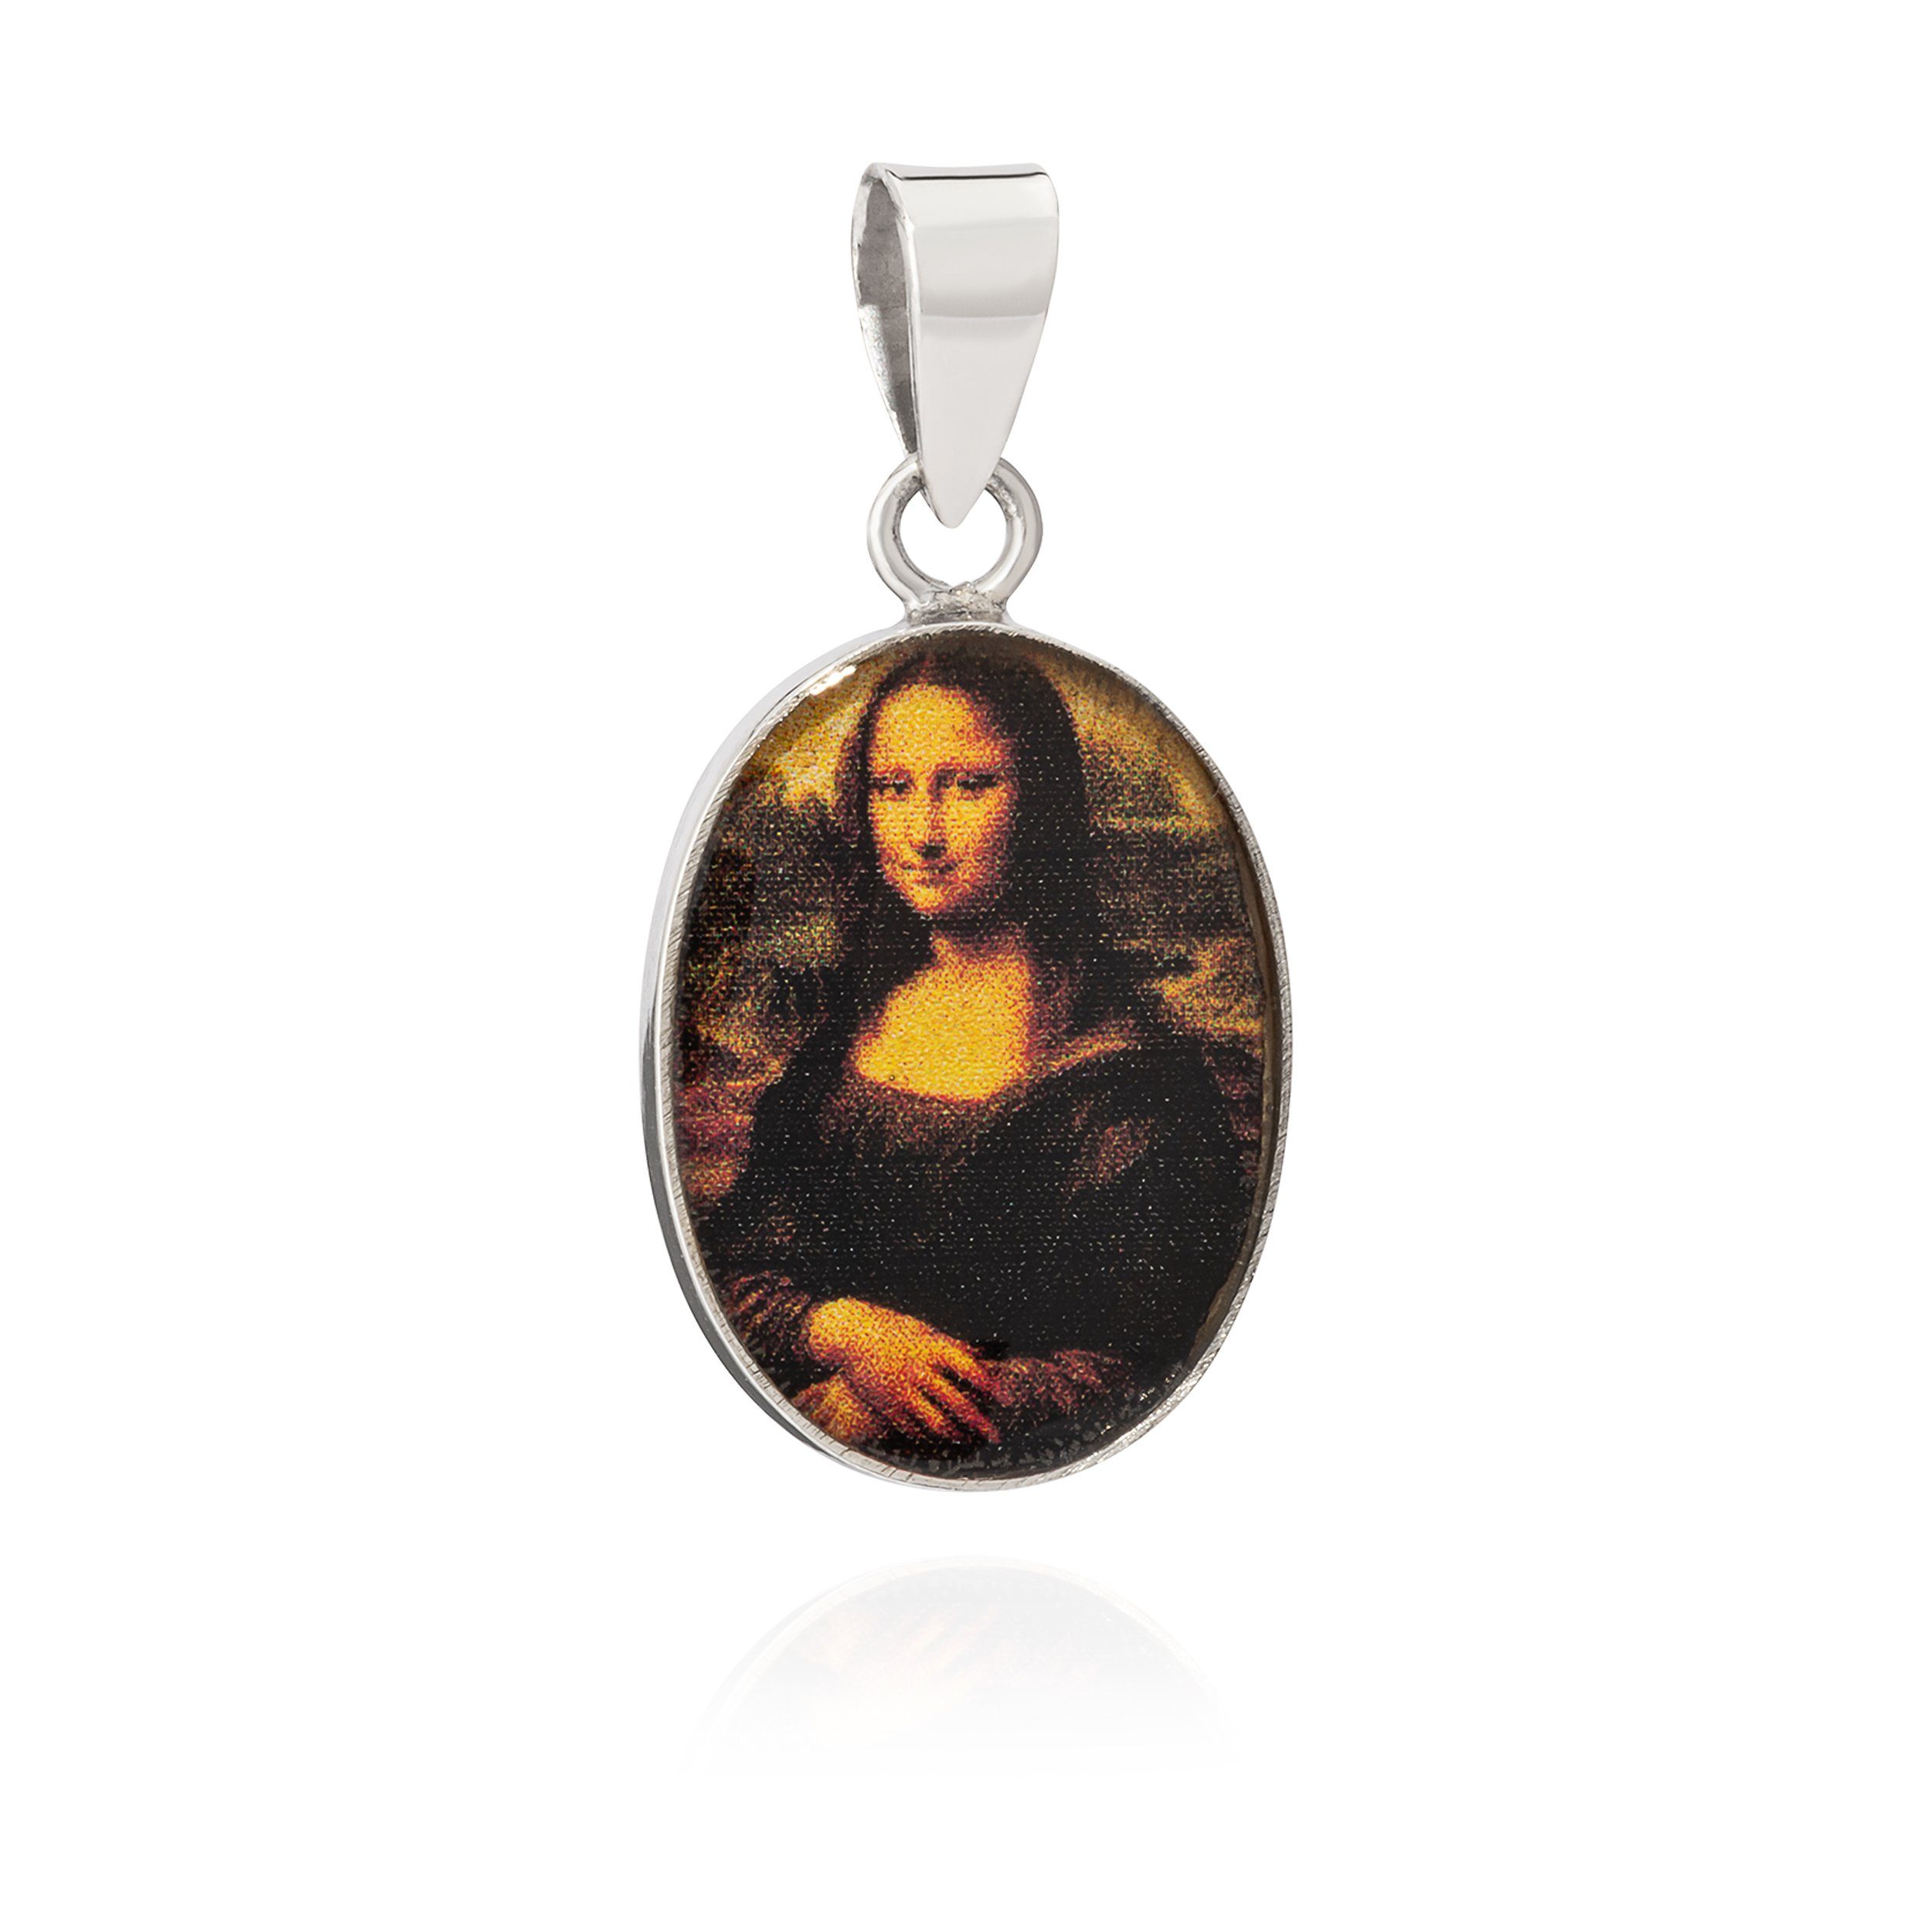 NKlaus Kettenanhänger Kettenanhänger Mona Lisa 925 Silber 21x14mm Silber, 925 Silber rhodiniert